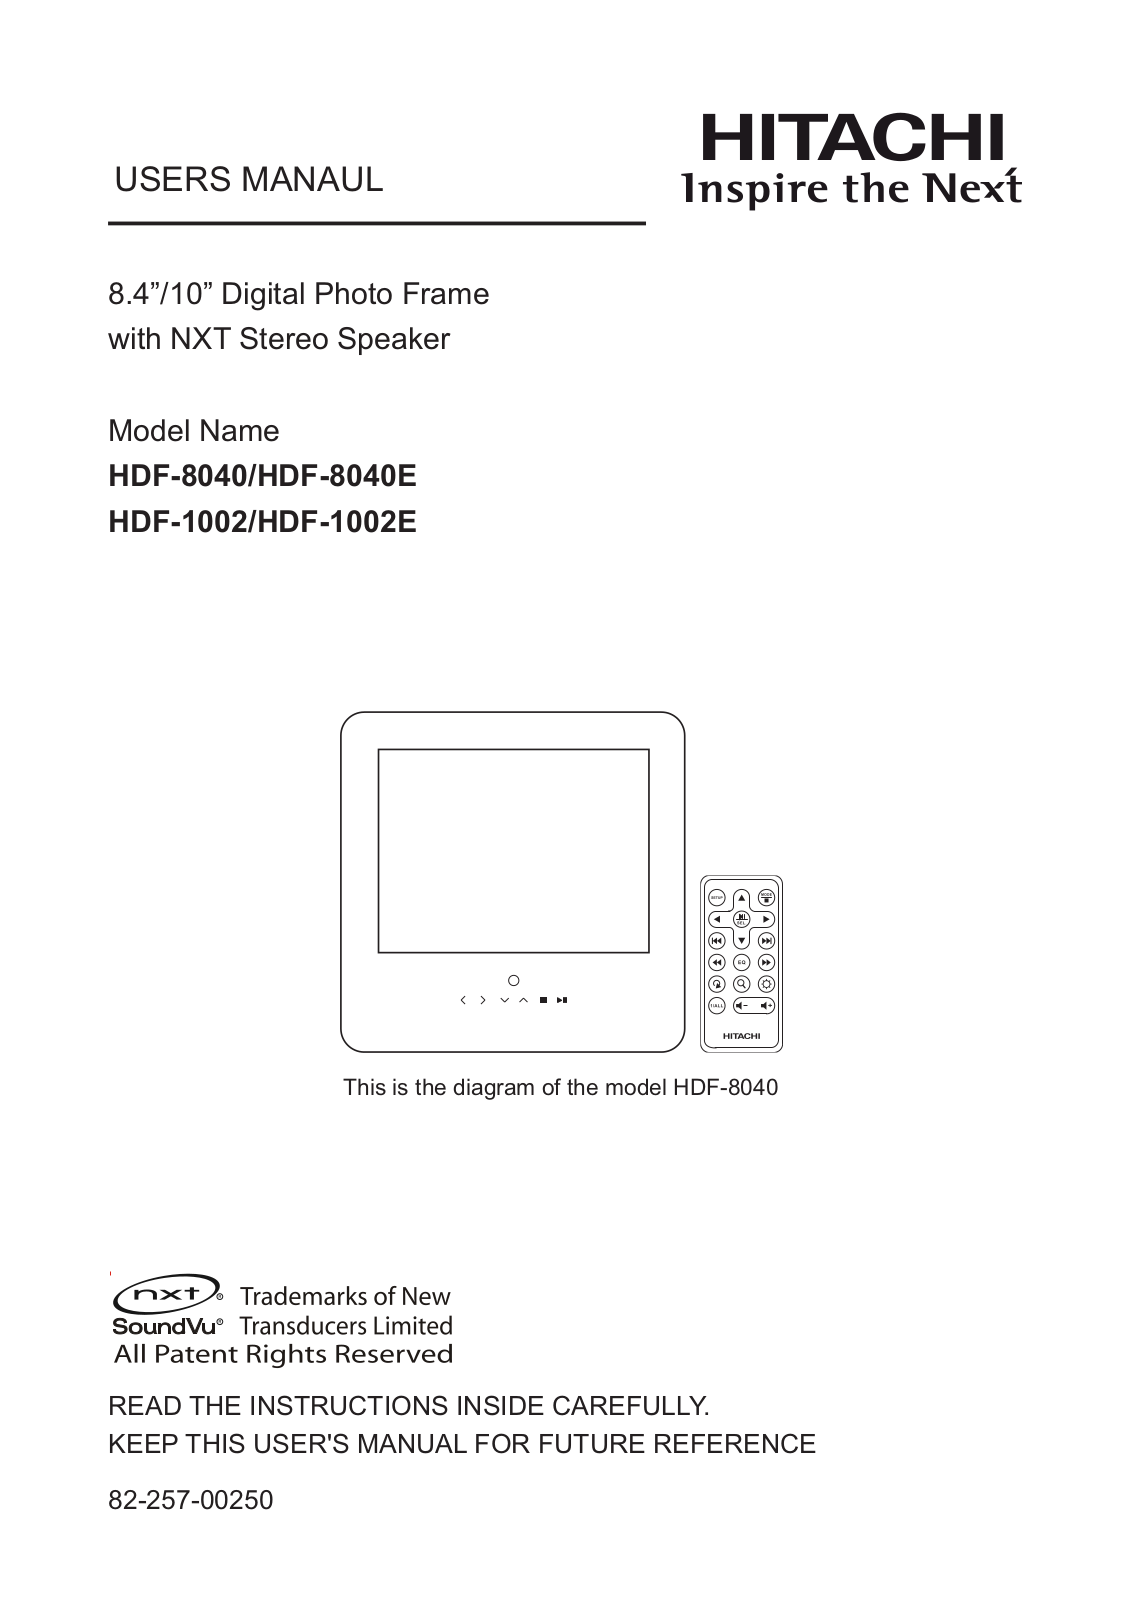 Hitachi HDF-1002, HDF-1002E, HDF-8040 User Manual